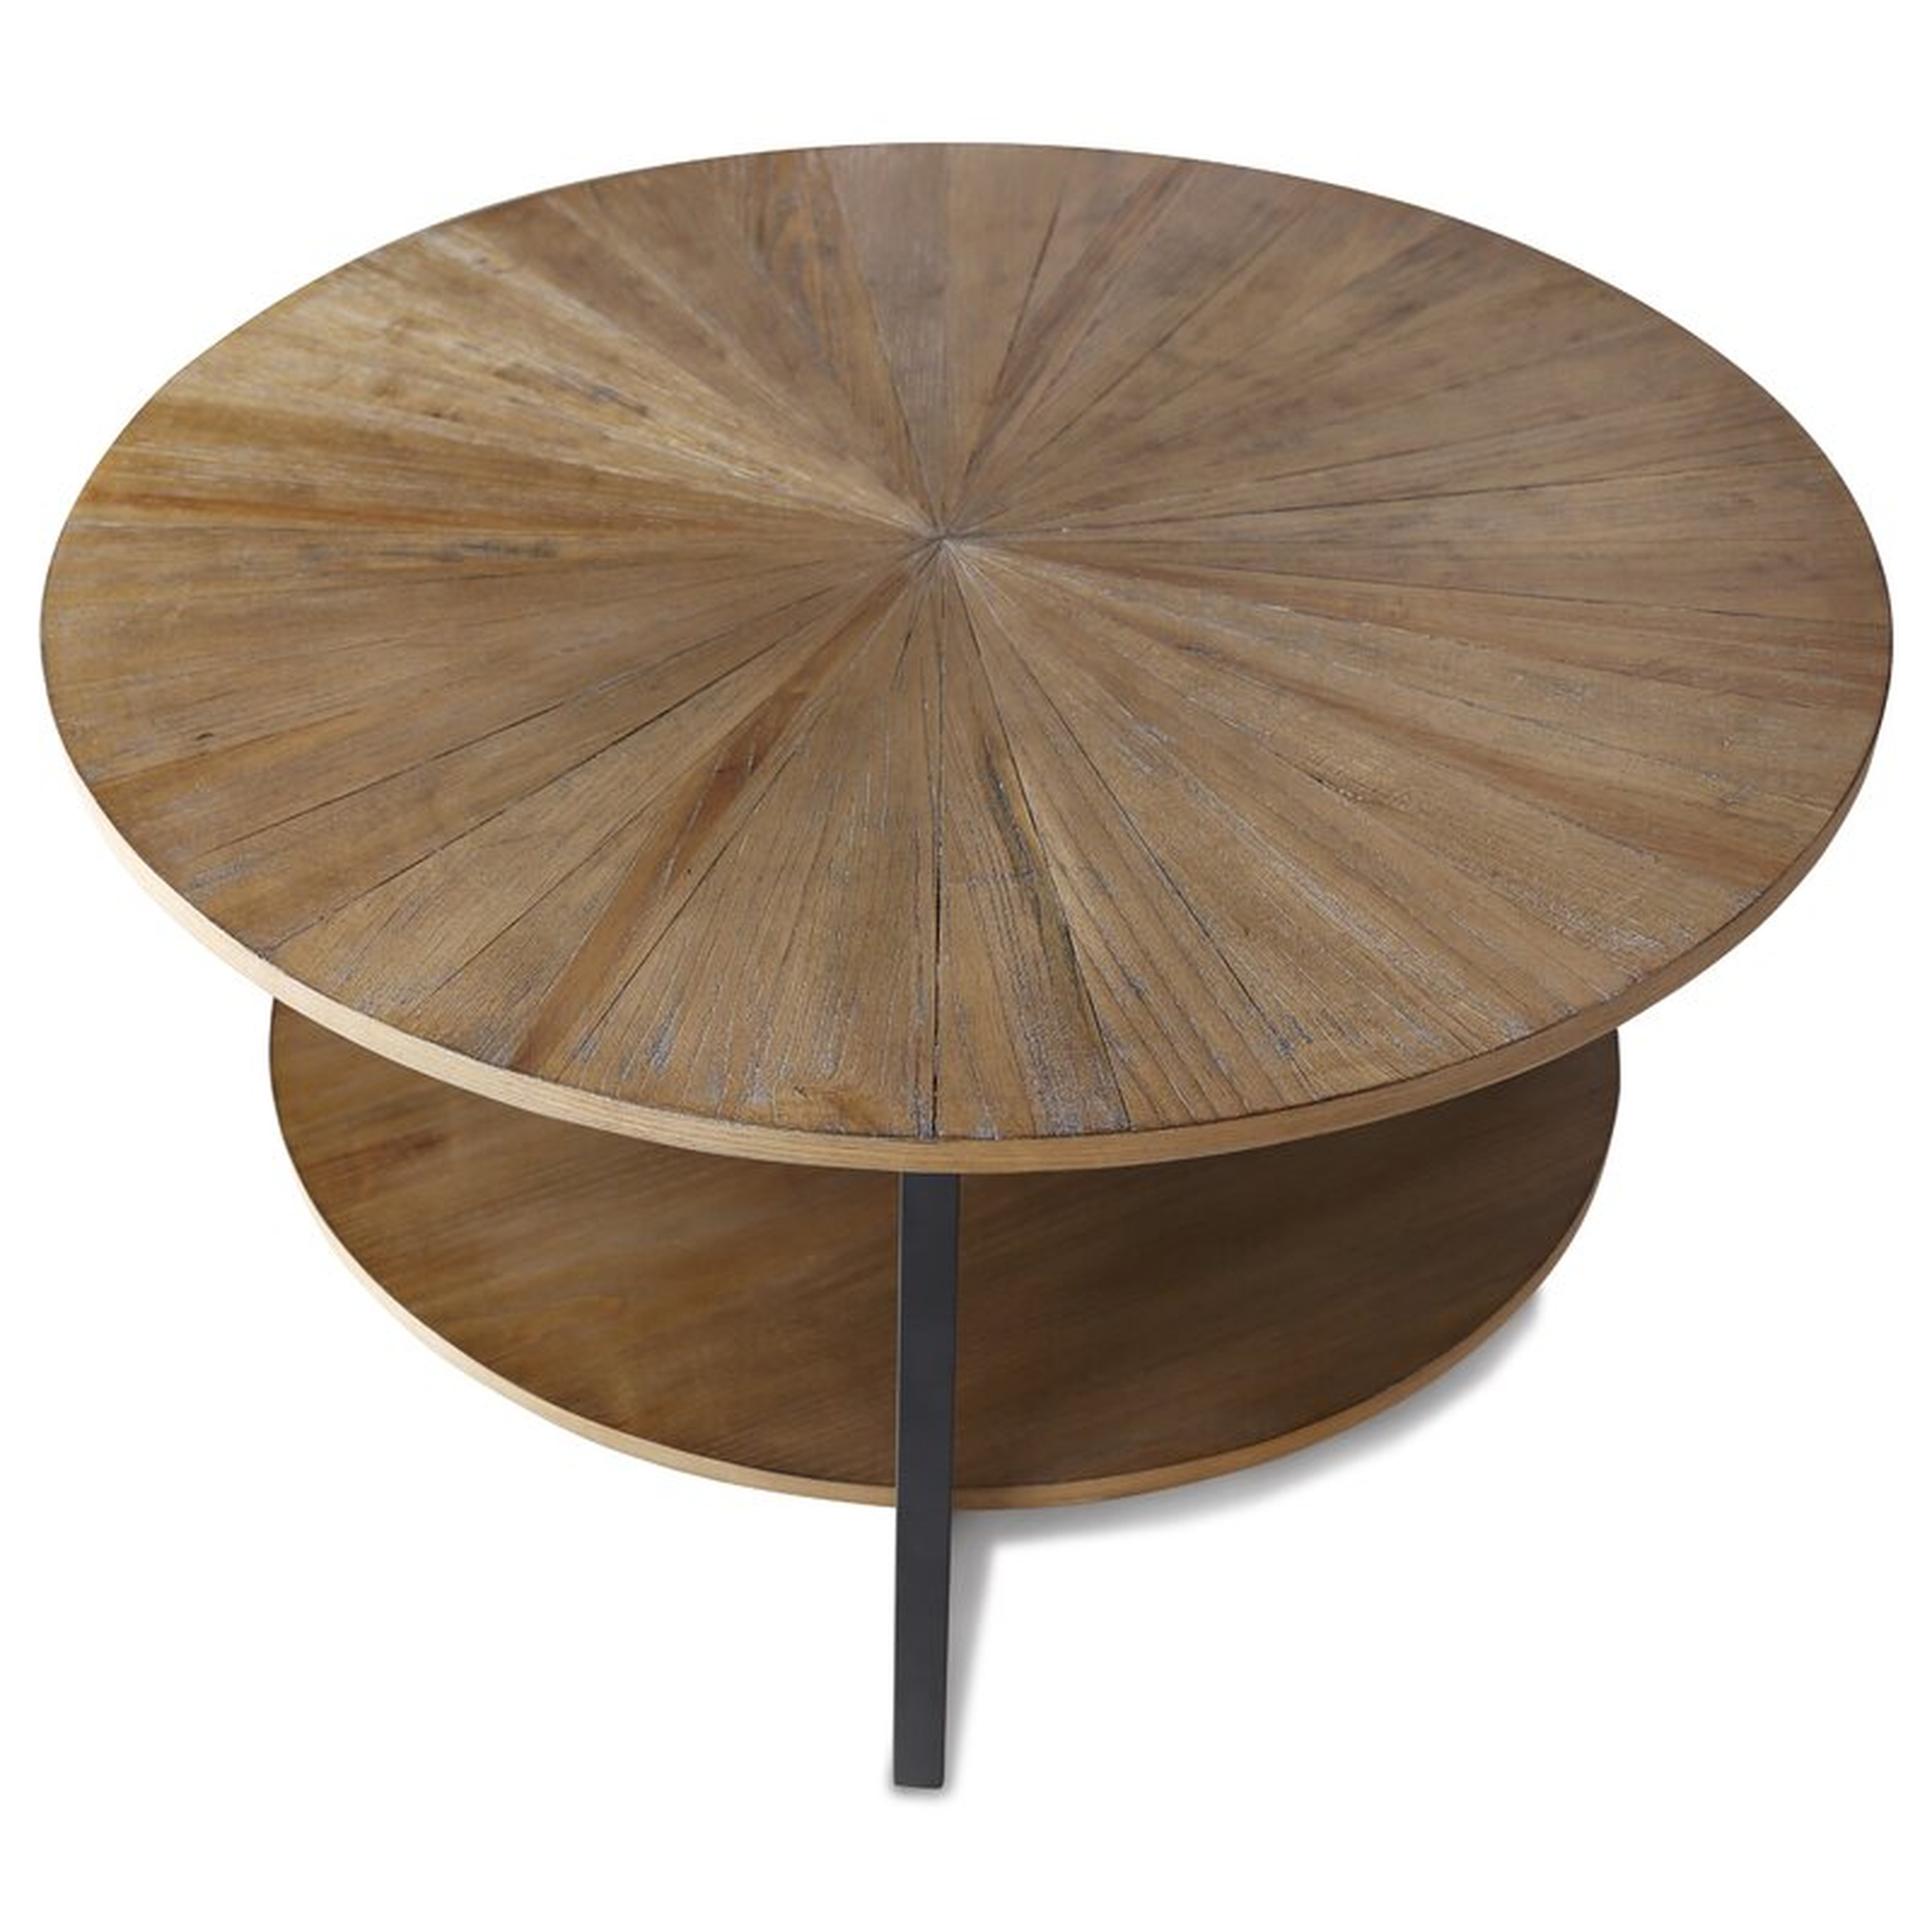 Modern Round Coffee Table With Storage, Rustic Brown - Wayfair